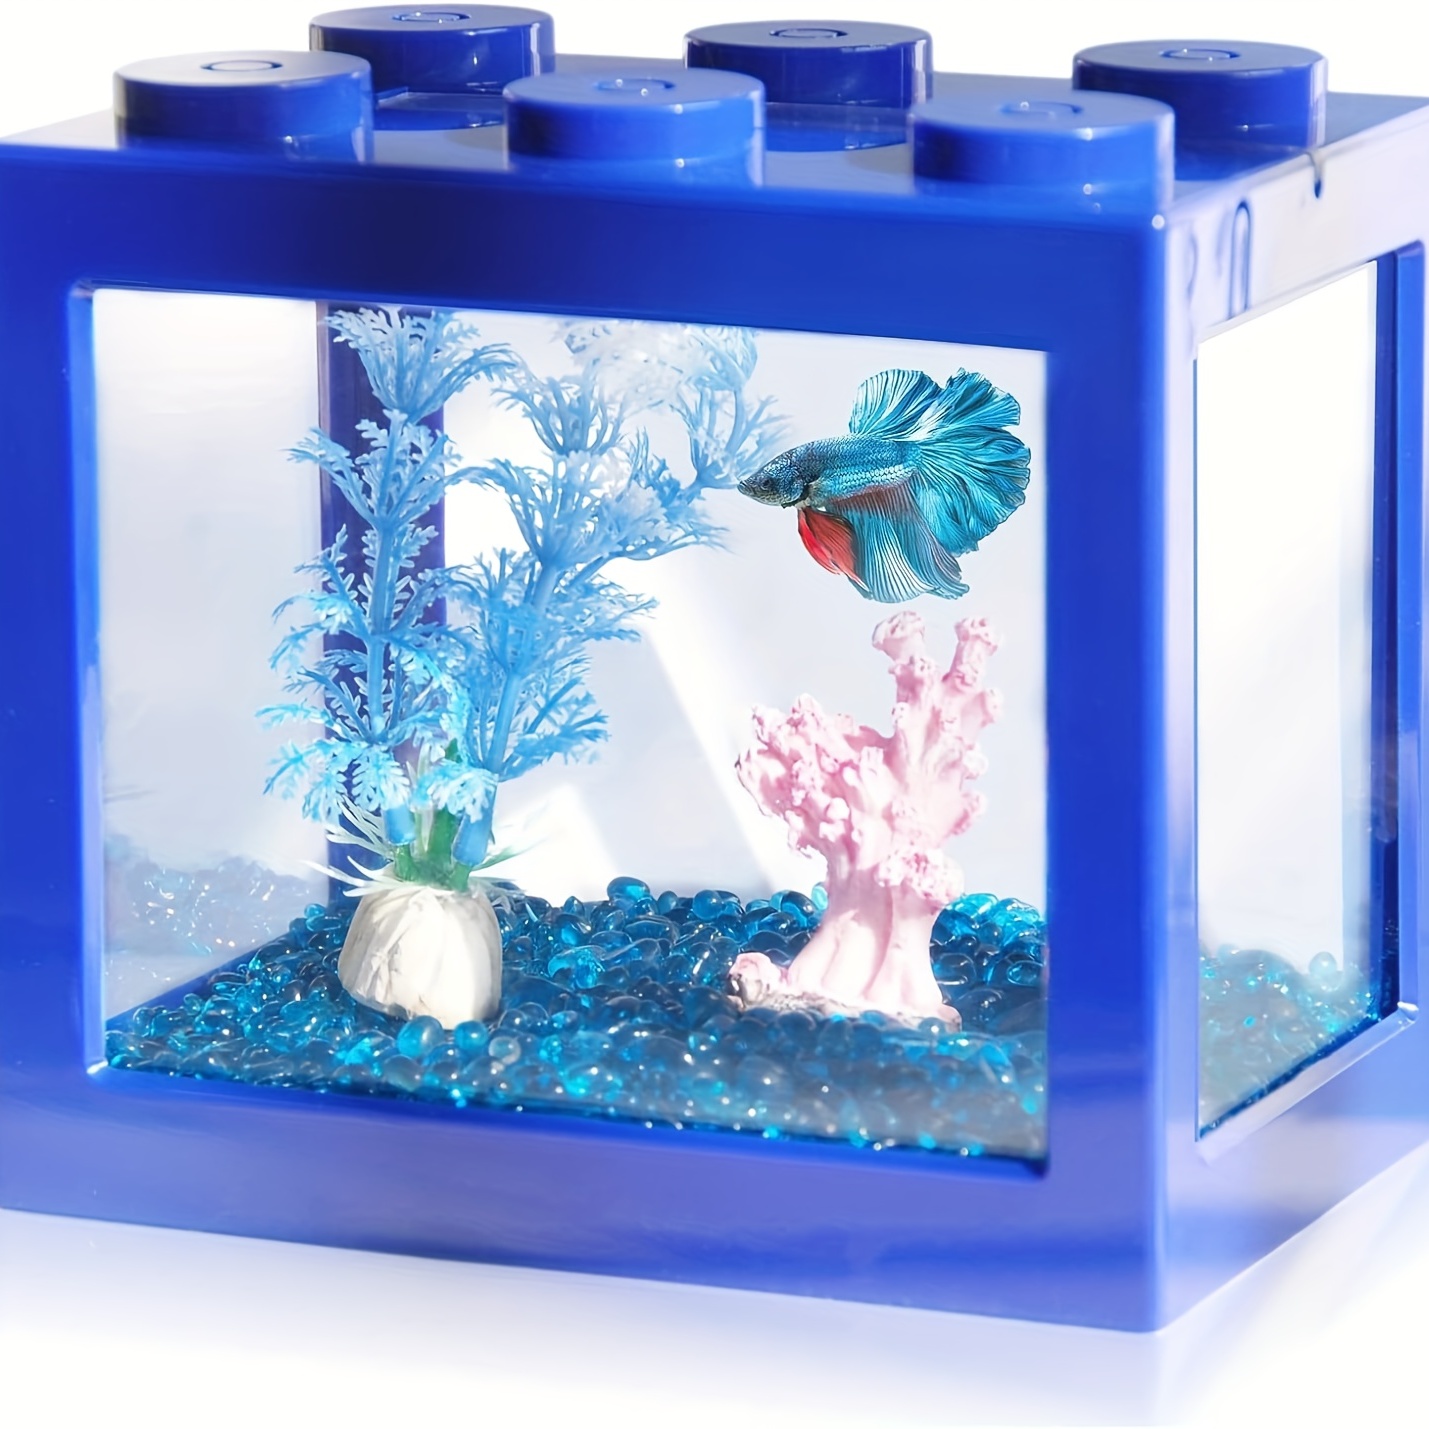 Small Fish Tank Aquarium Fish Tank Starter Kit Mini Betta Bow Tank Tiny  Aquarium Tank For Office Home Room Decor（Just The Fish Tank Without Other  Acce